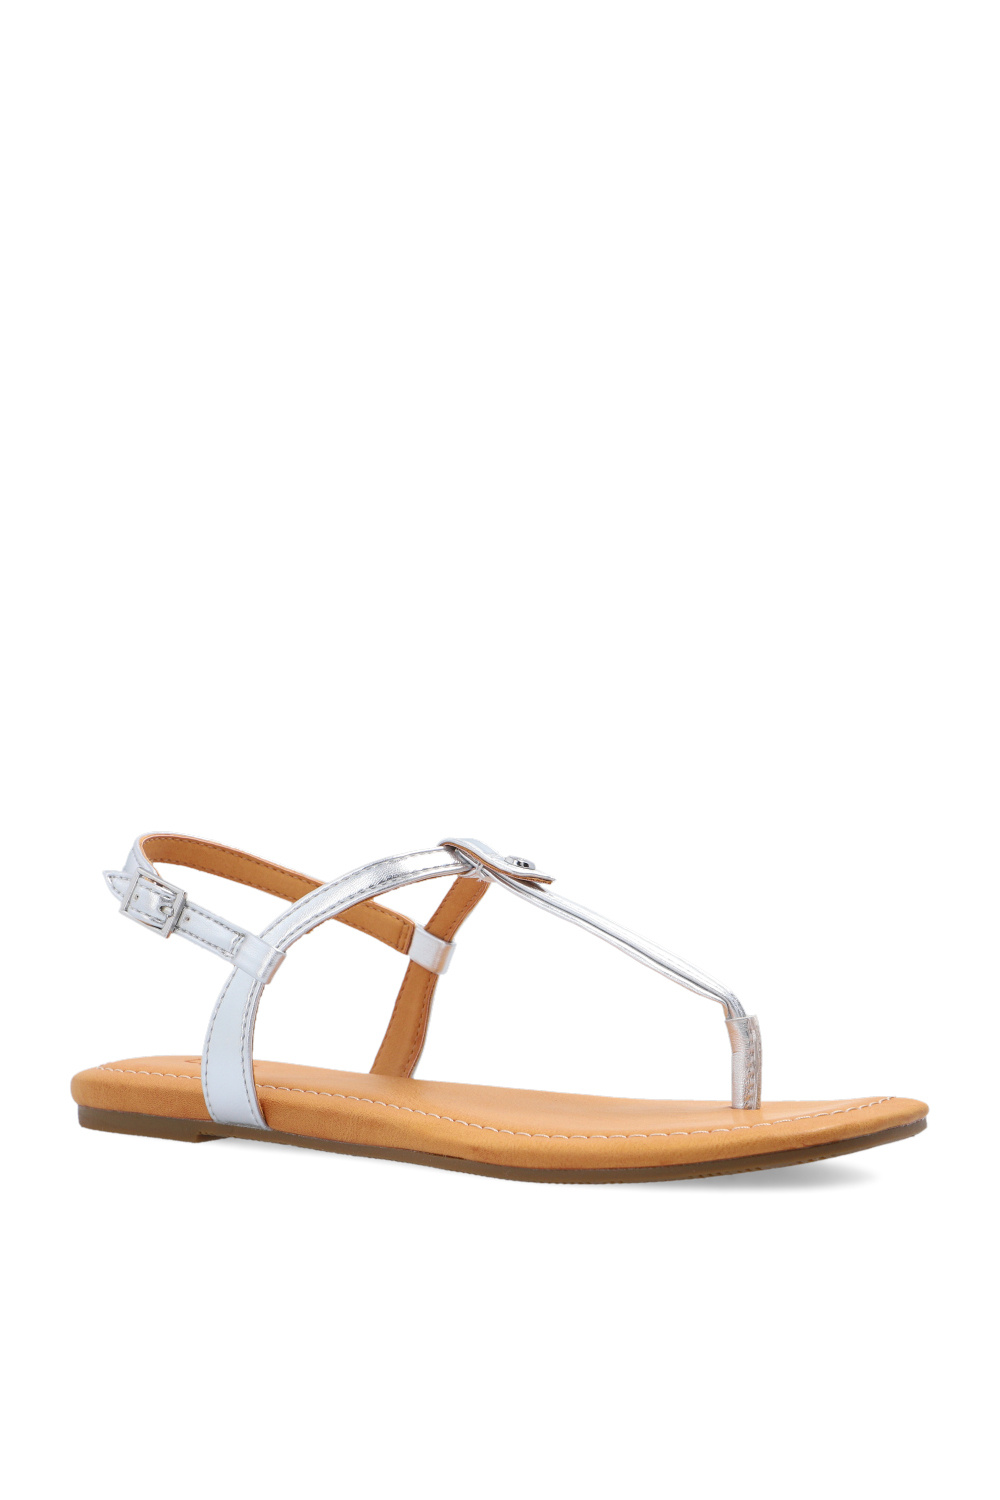 ugg Boots ‘Madeena’ sandals